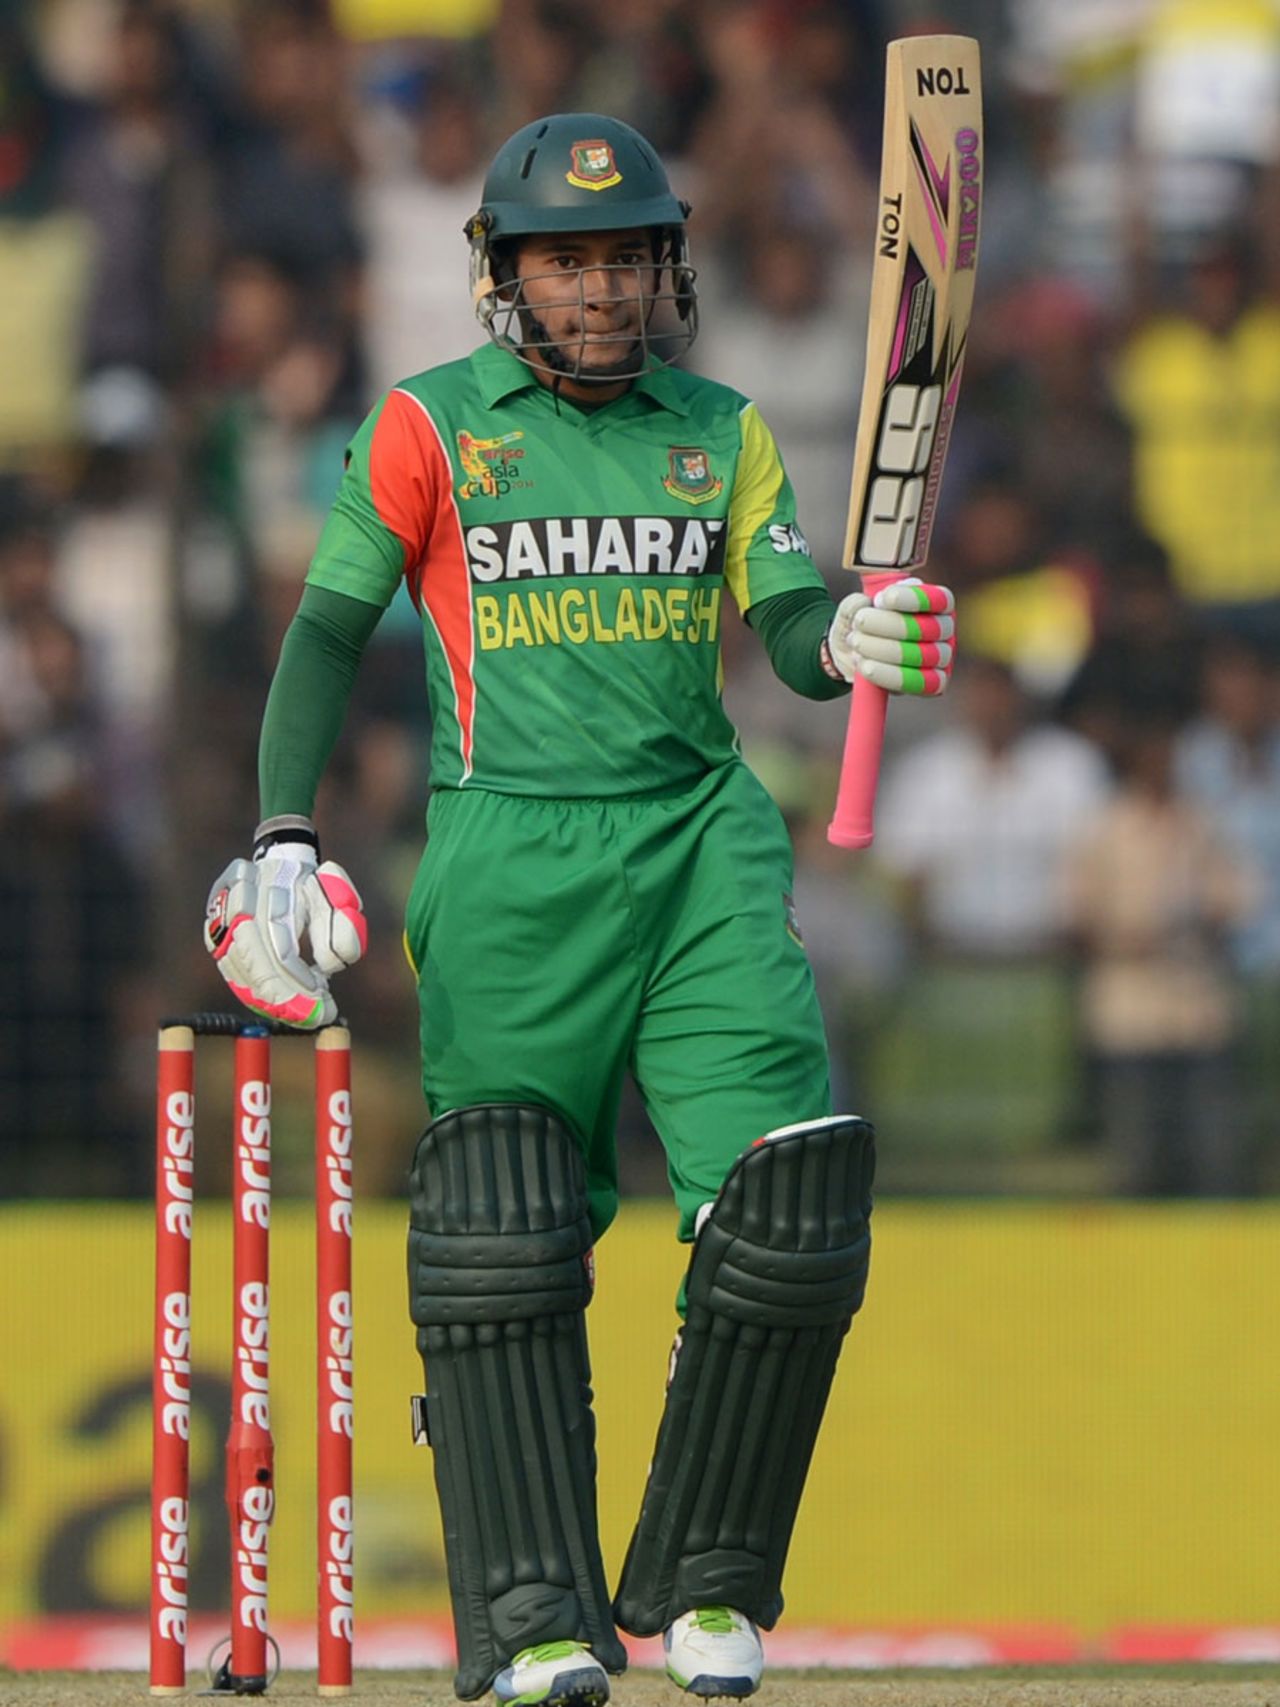 Mushfiqur Rahim raises the bat after reaching his fifty, Bangladesh v India, Asia Cup 2014, Fatullah, February 26, 2014